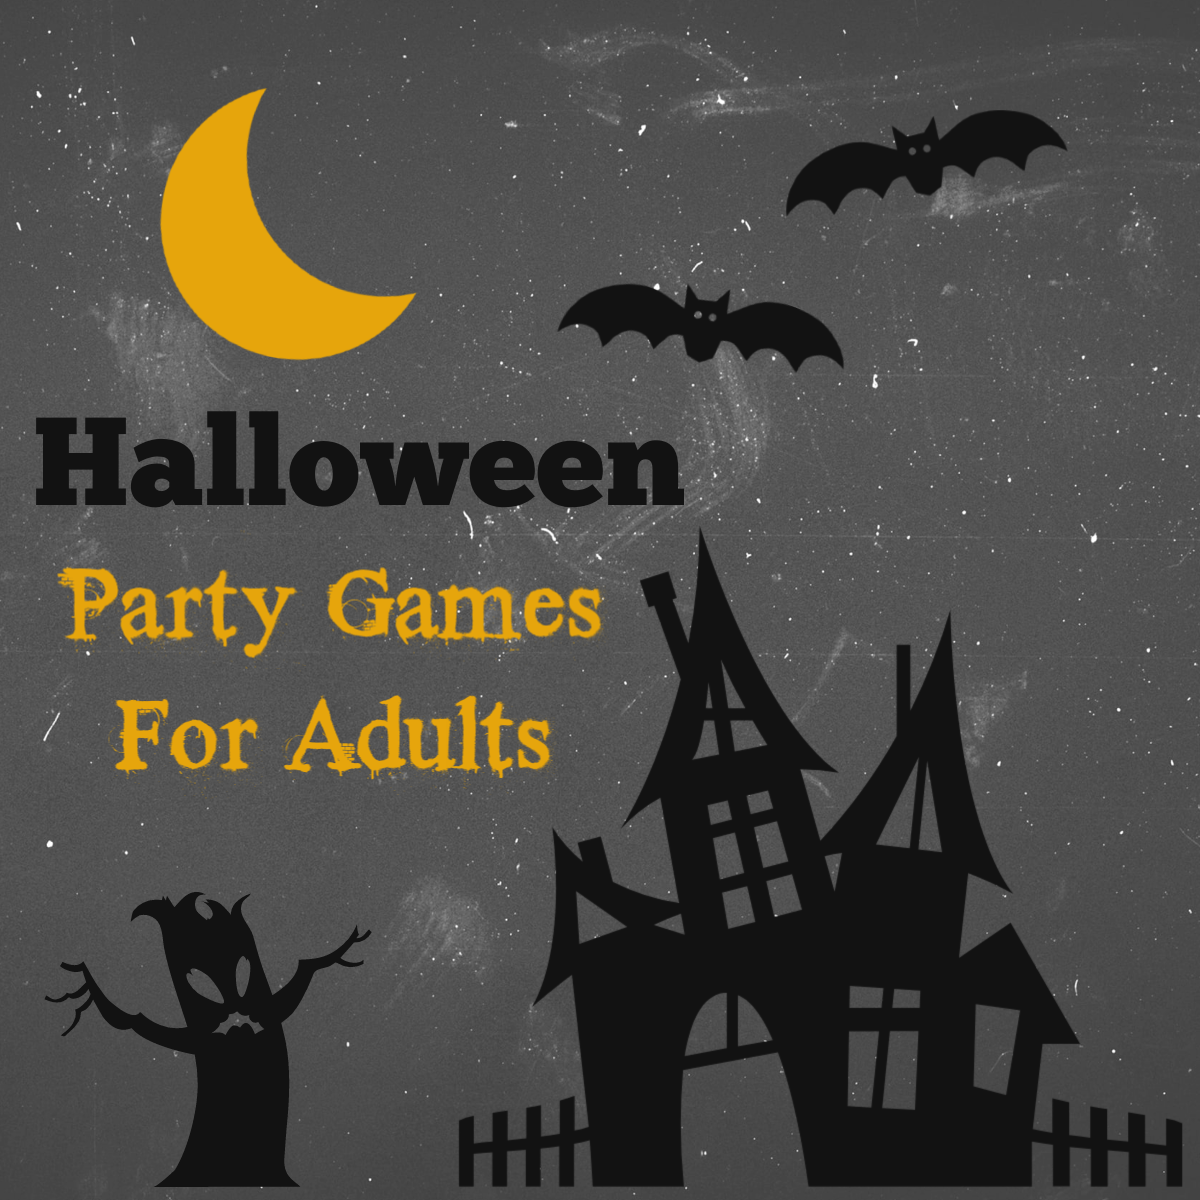 Fun Halloween Party Games